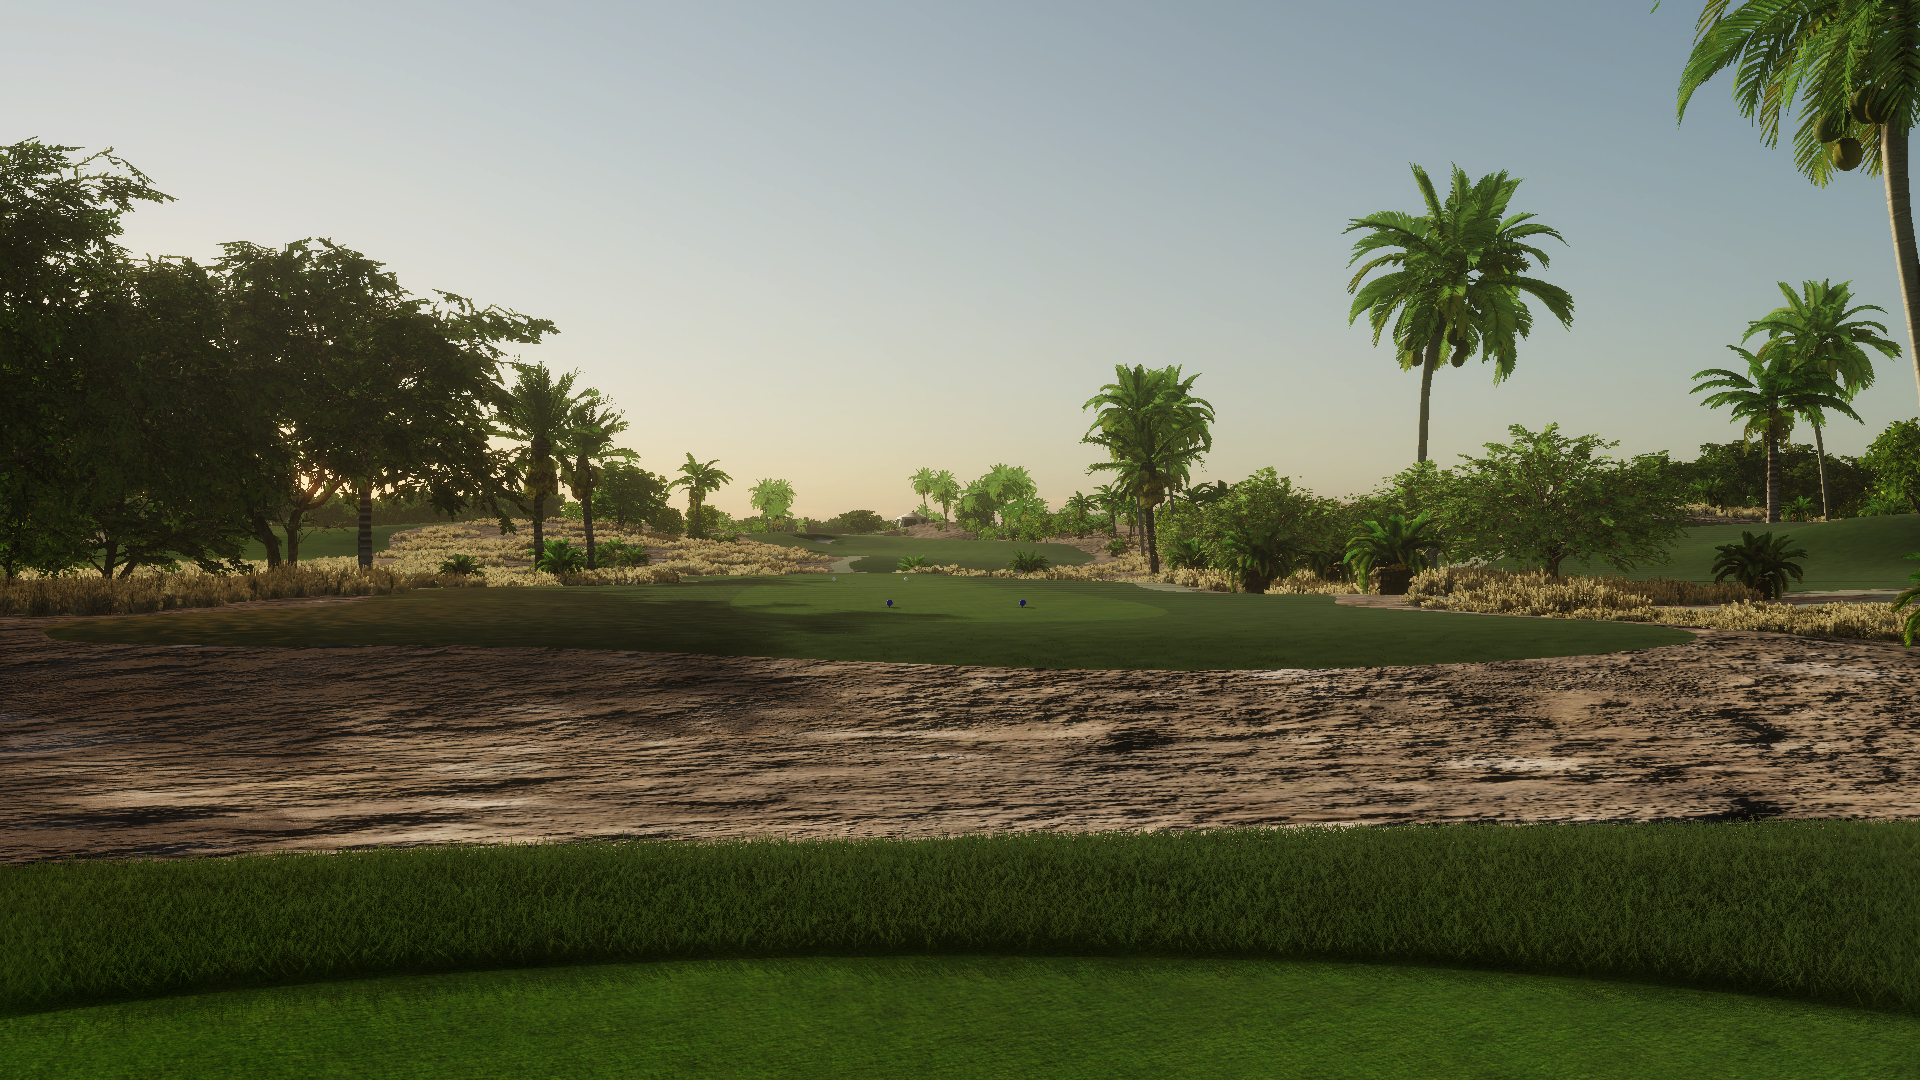 Emirates Golf Club-Majlis